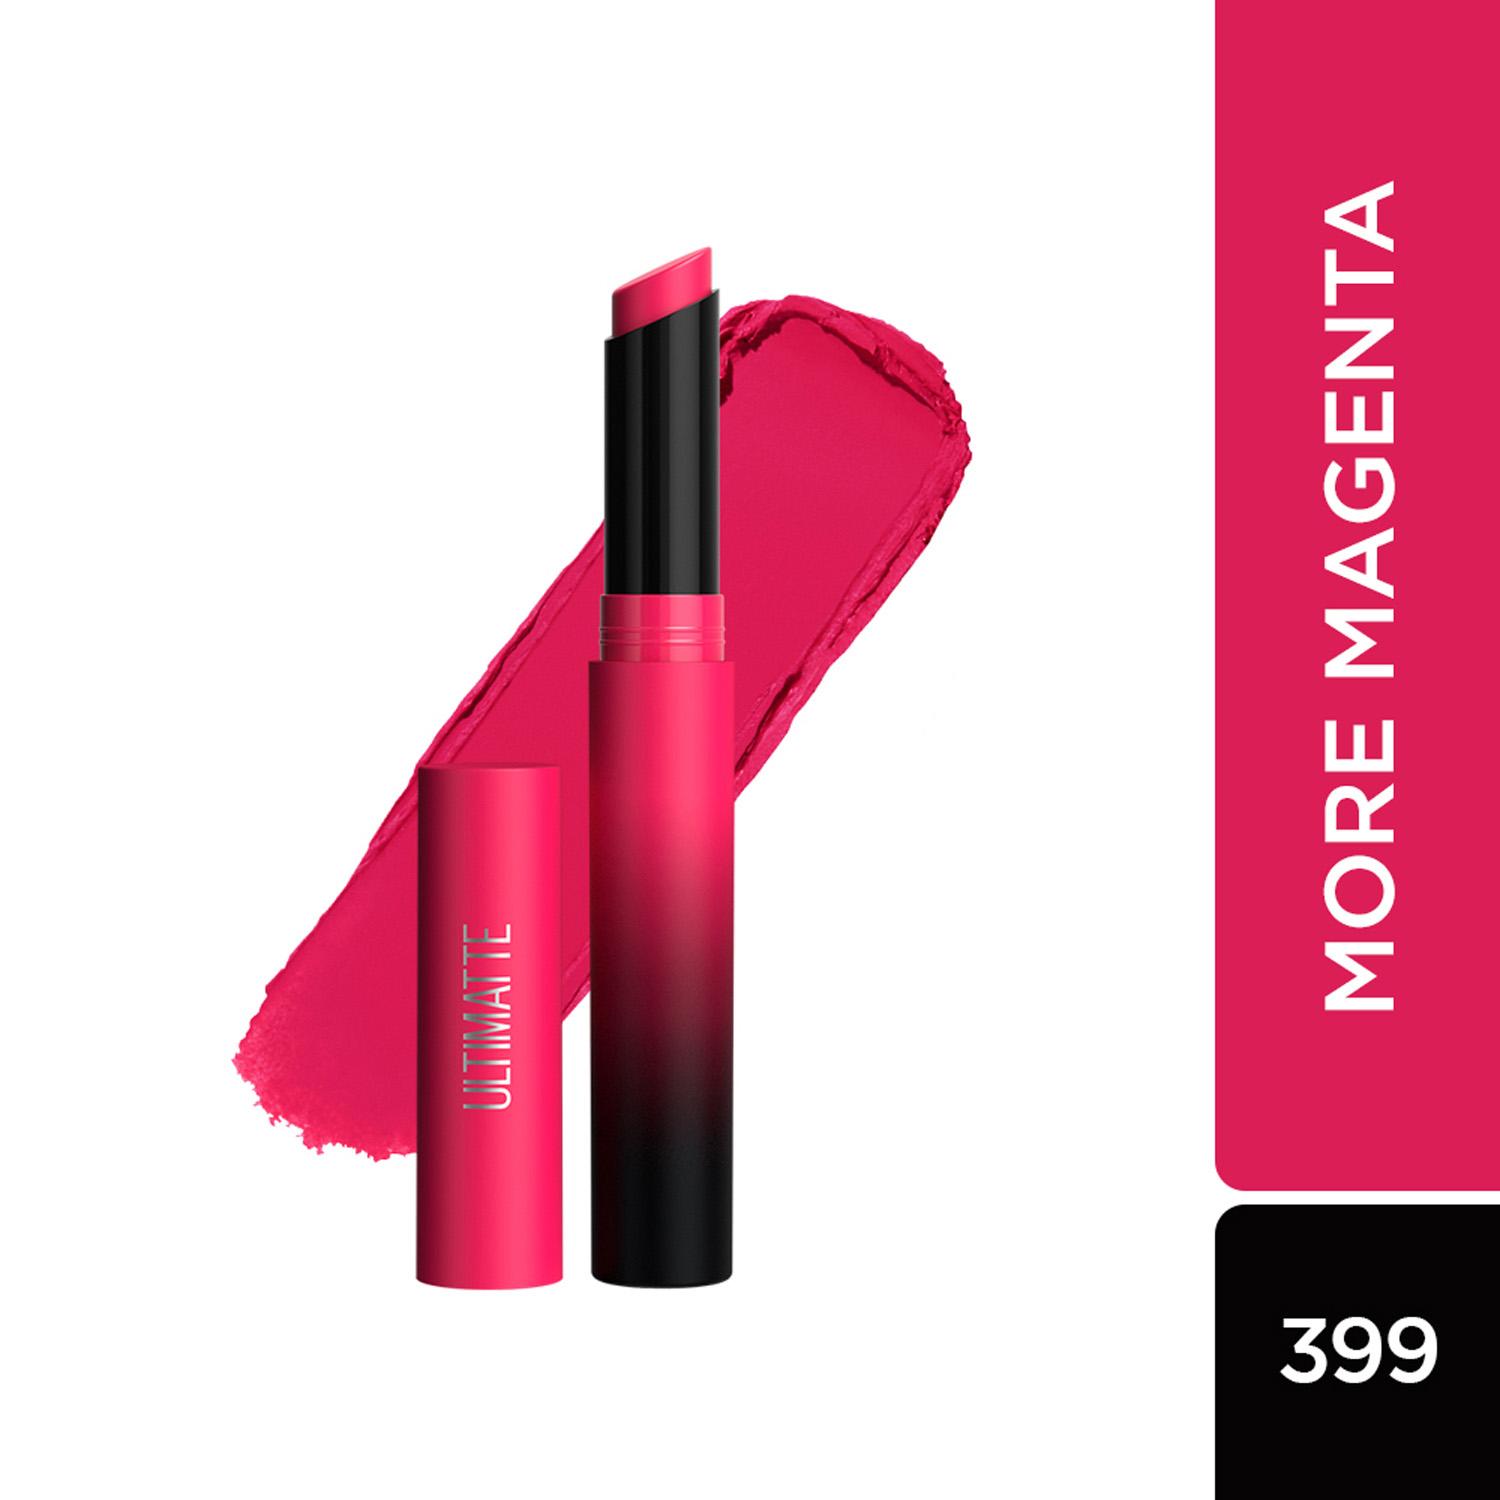 Maybelline New York | Maybelline New York Color Sensational Ultimattes Lipstick - More Magenta (1.7g)